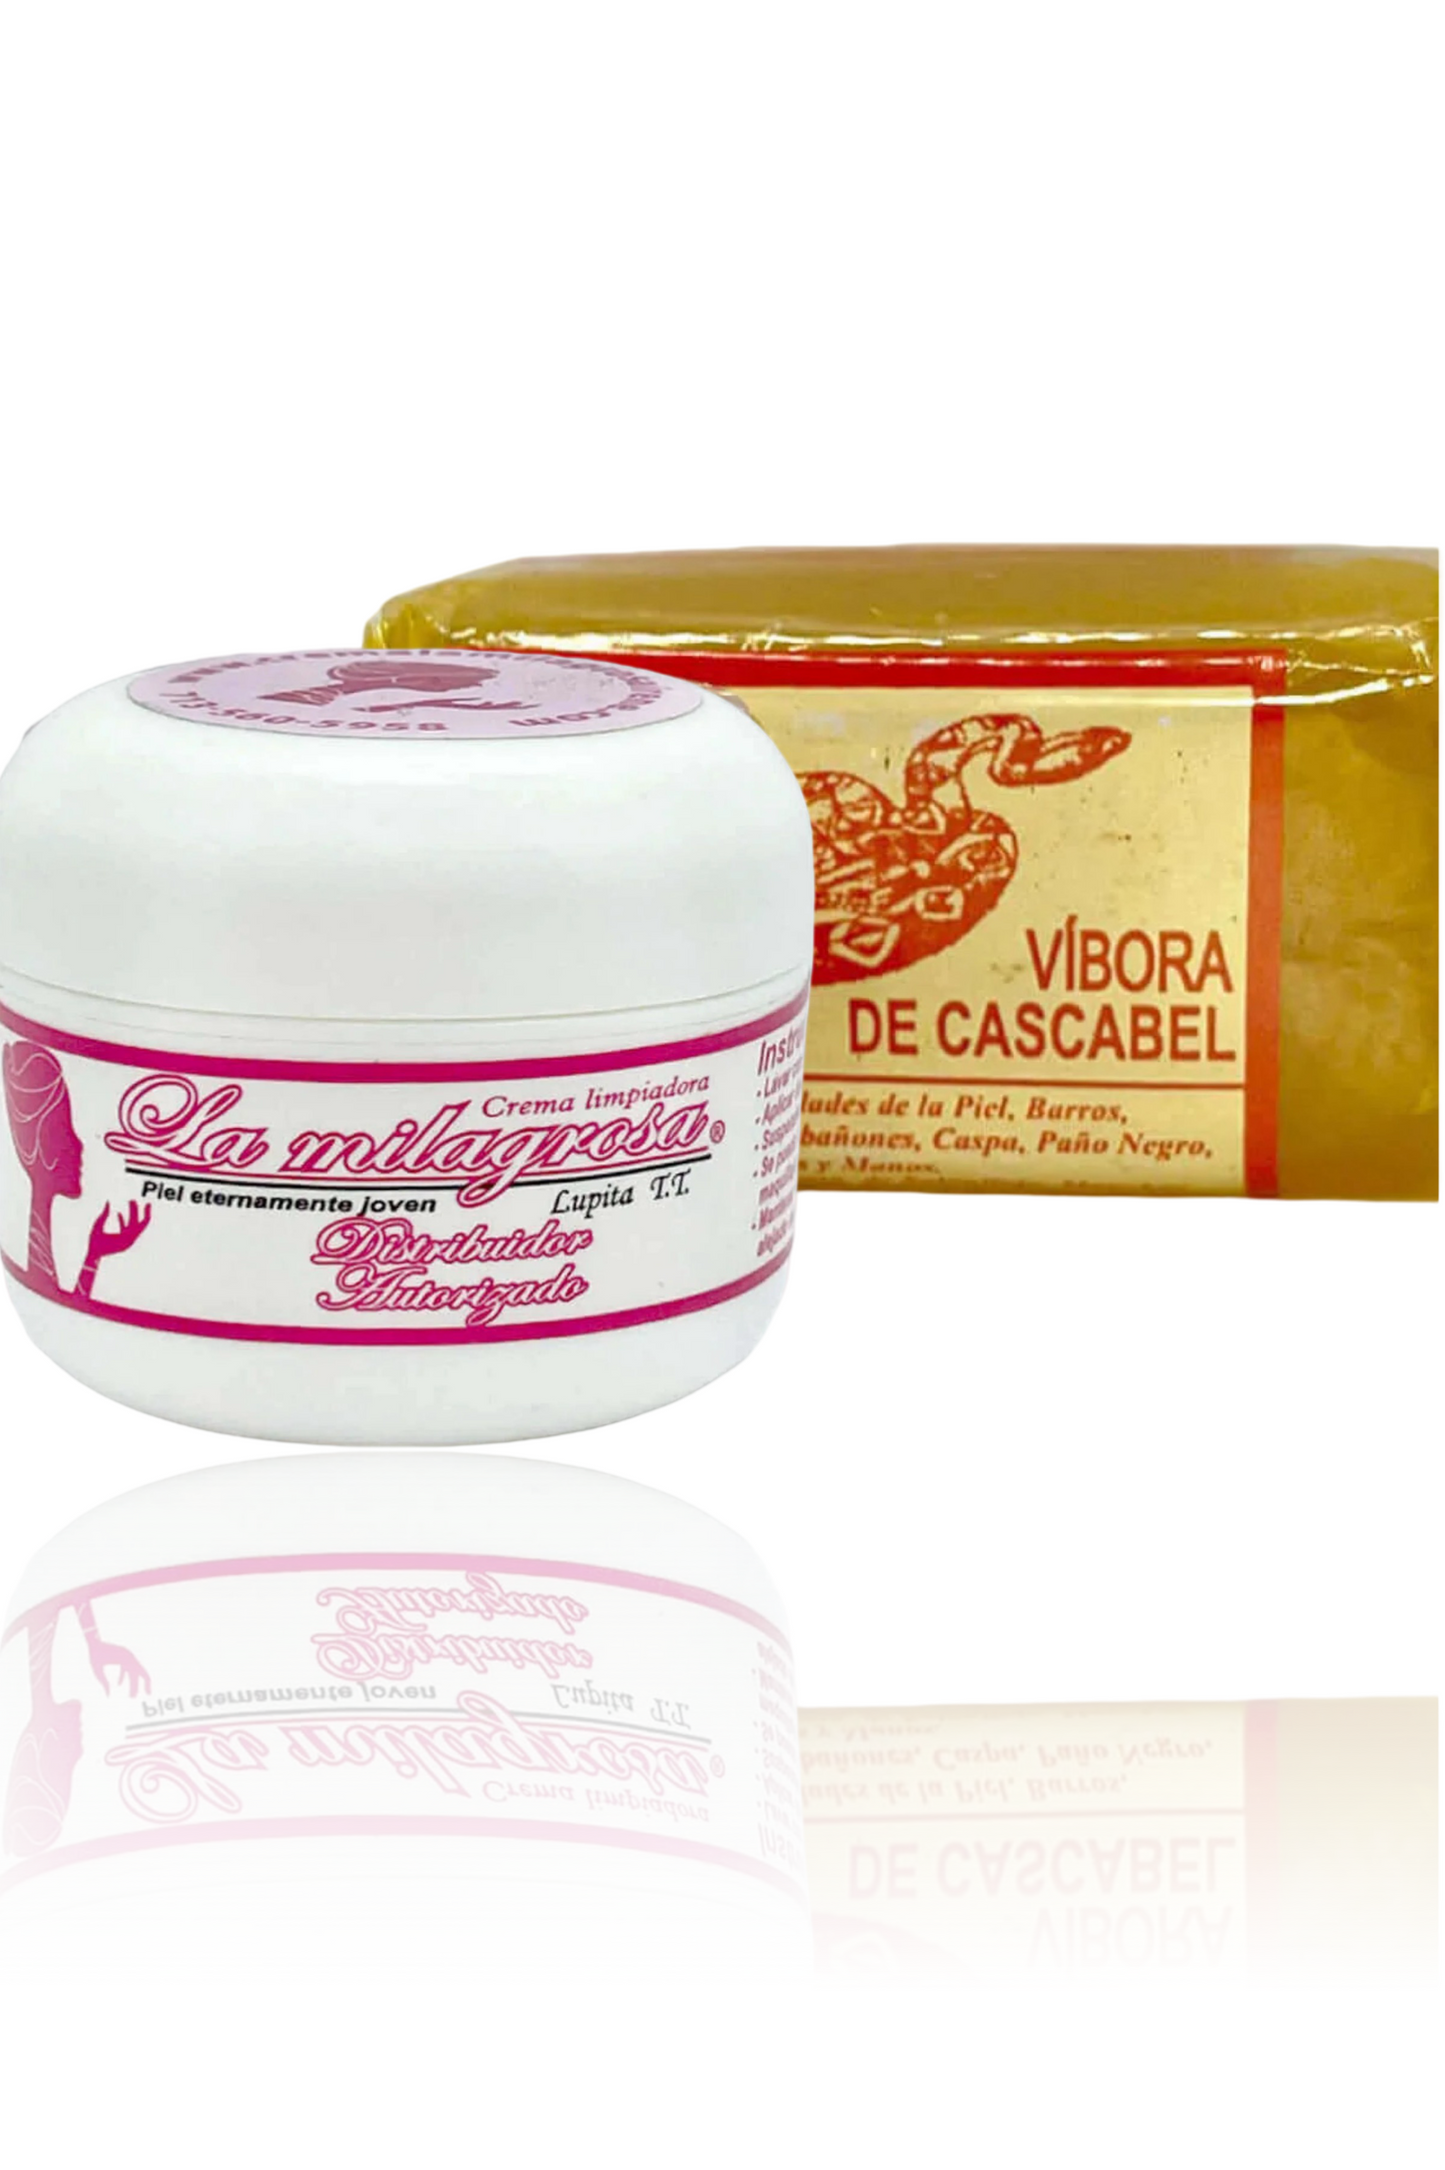 1- Crema facial La Milagrosa + jabón vibora de cascabel